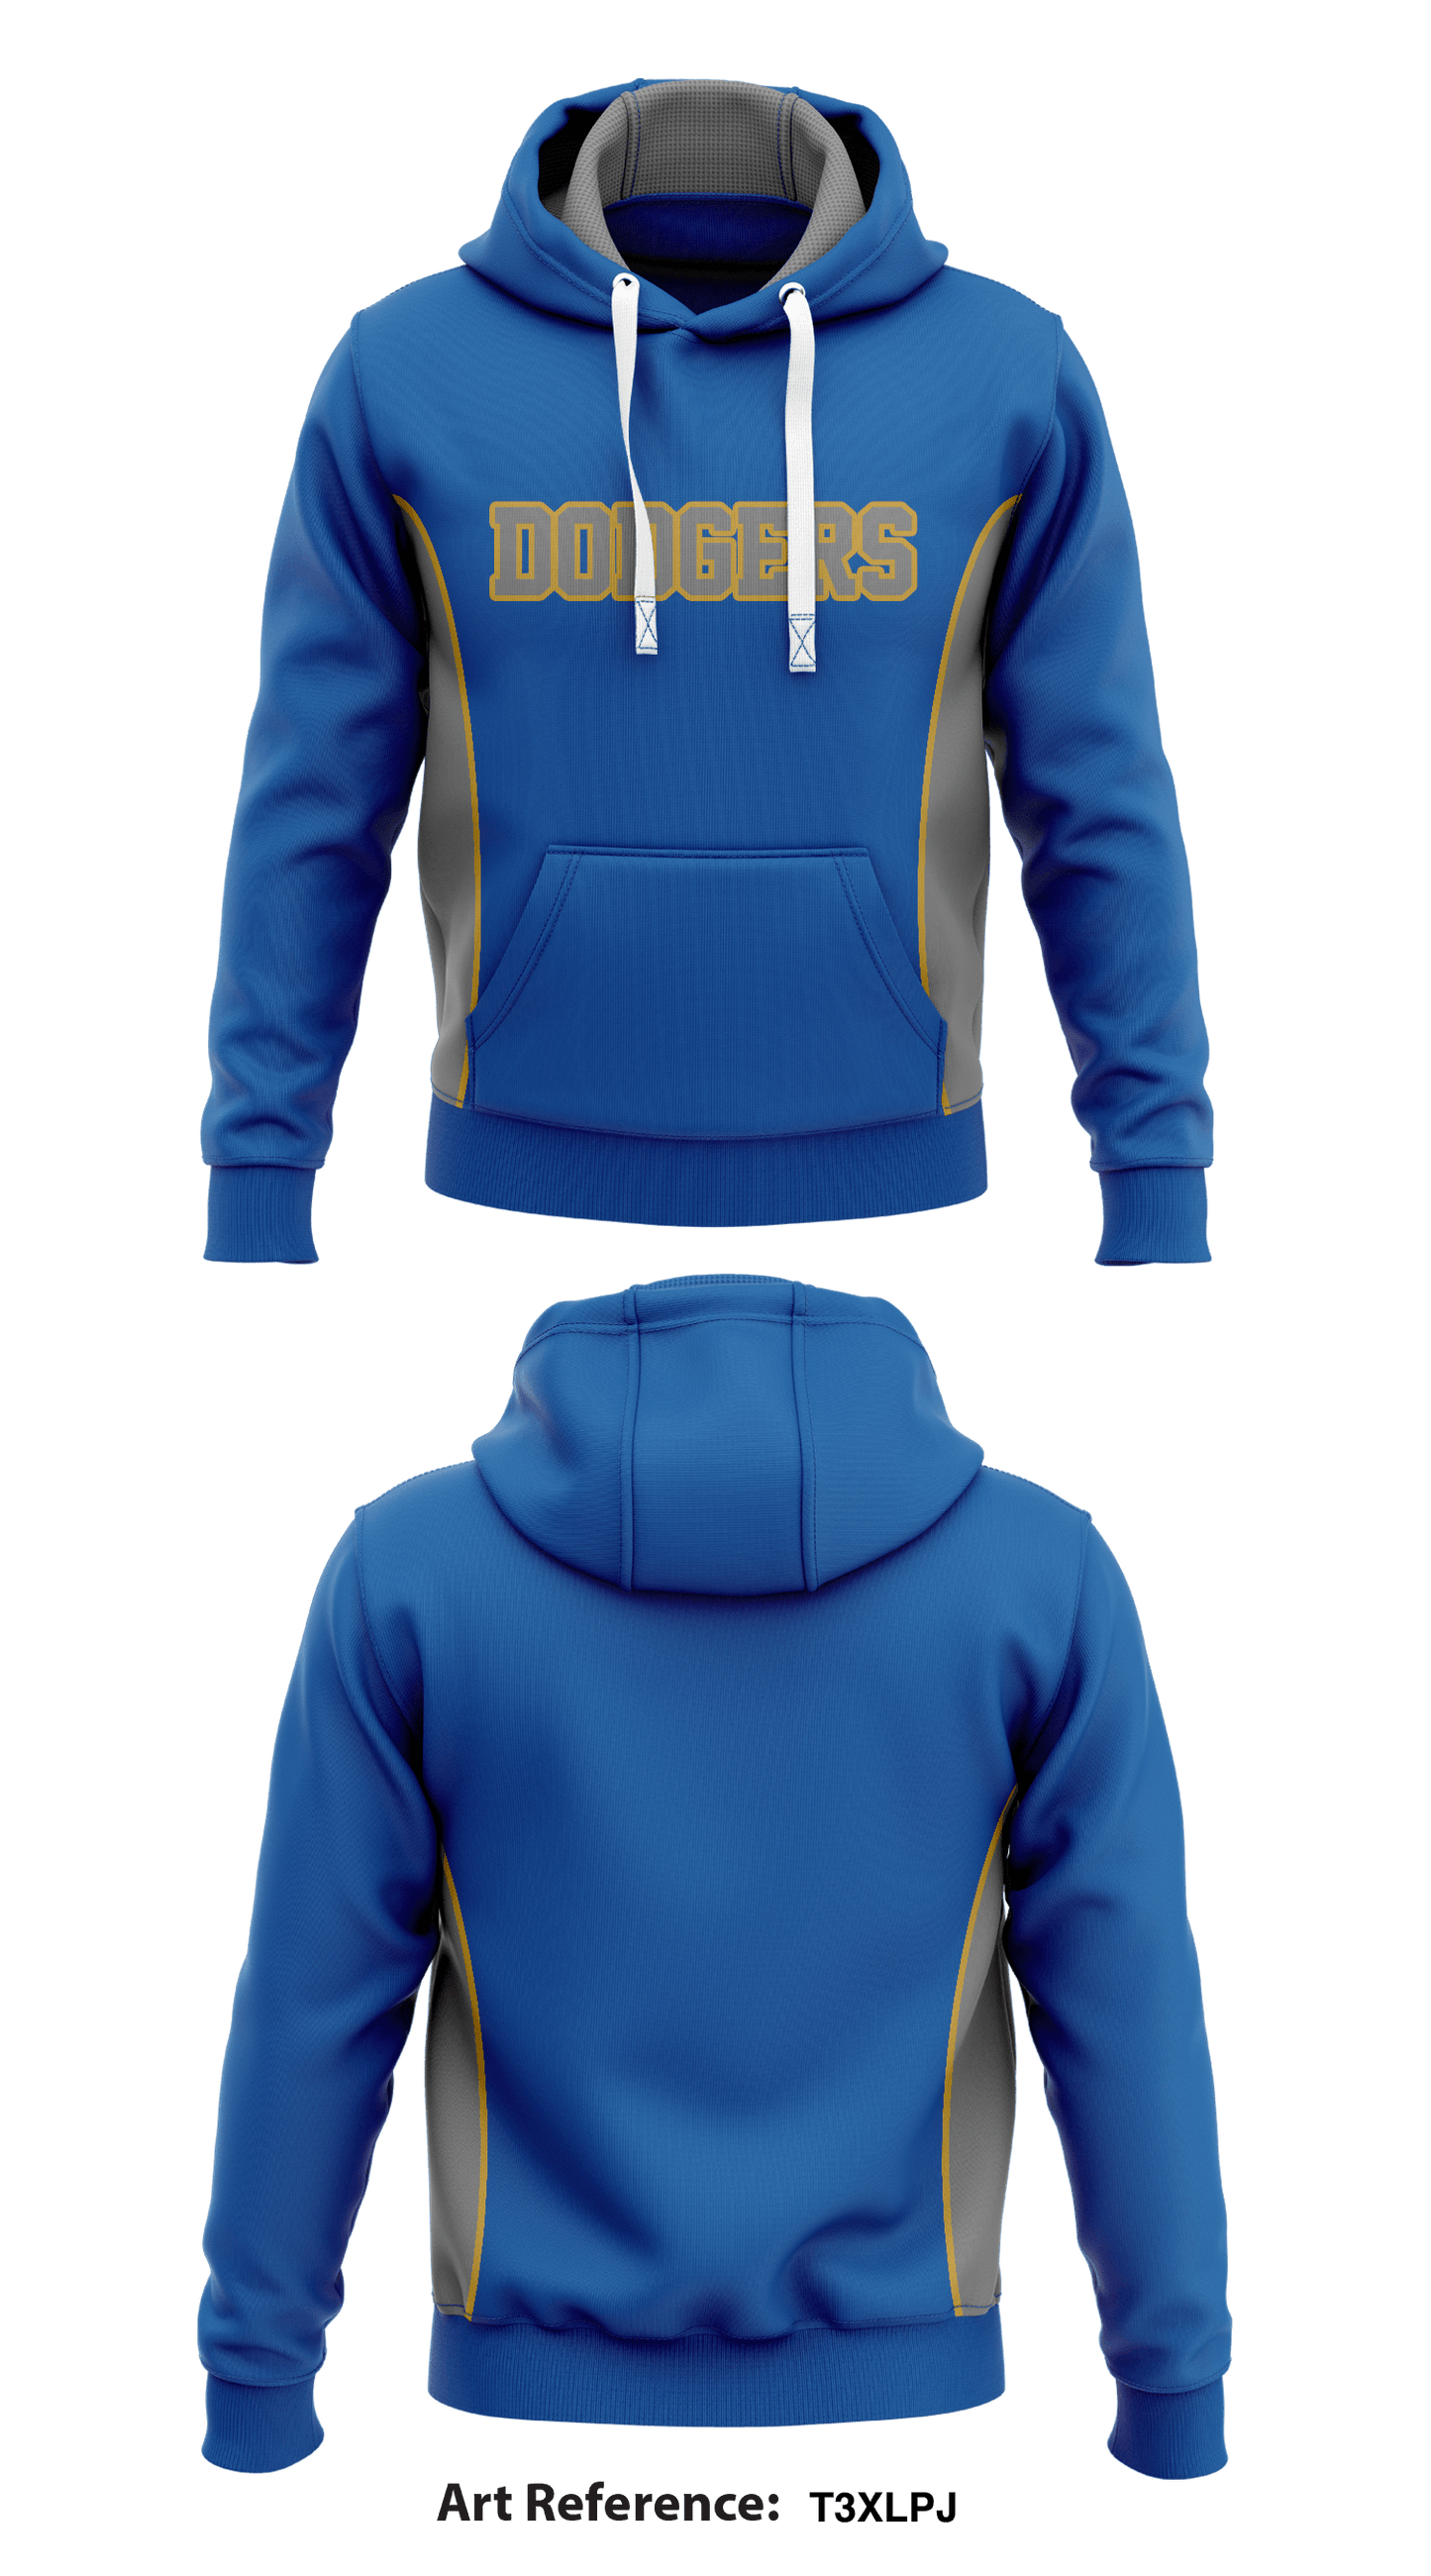 Dodgers Store 1  Core Men's Hooded Performance Sweatshirt - T3xLPj